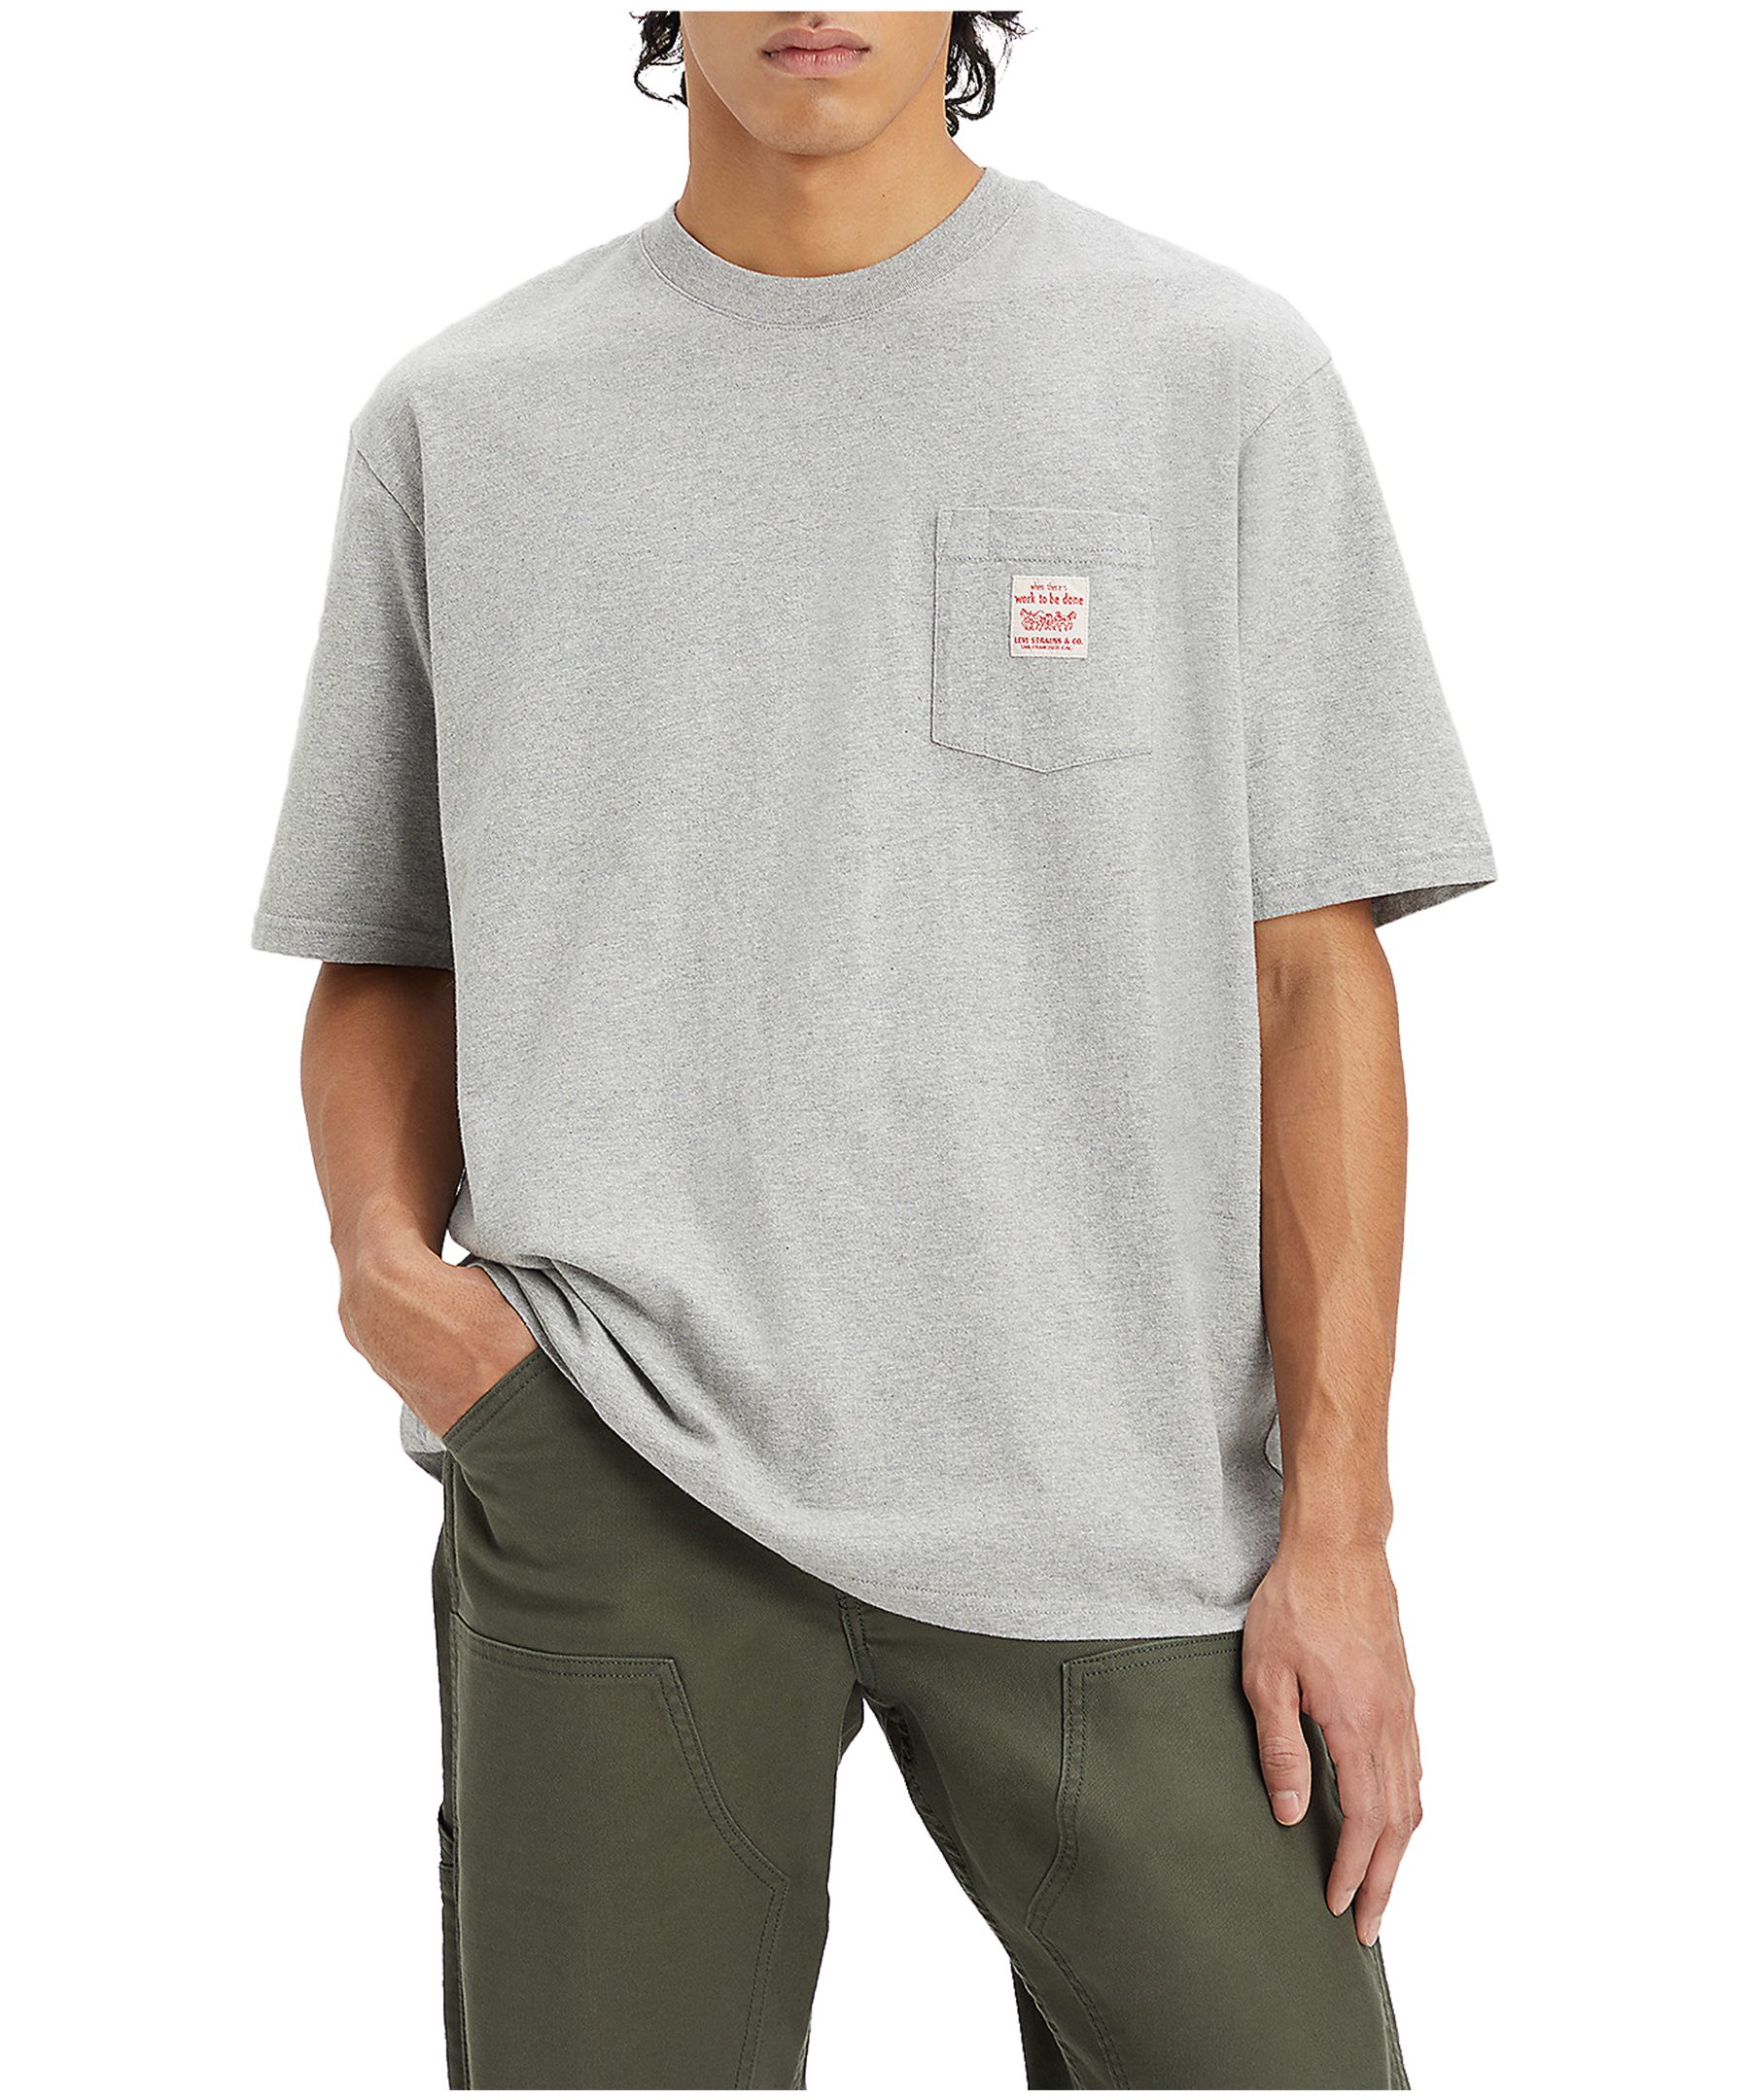 Mark's has Levi's Men's Workwear Pocket Logo Cotton T Shirt